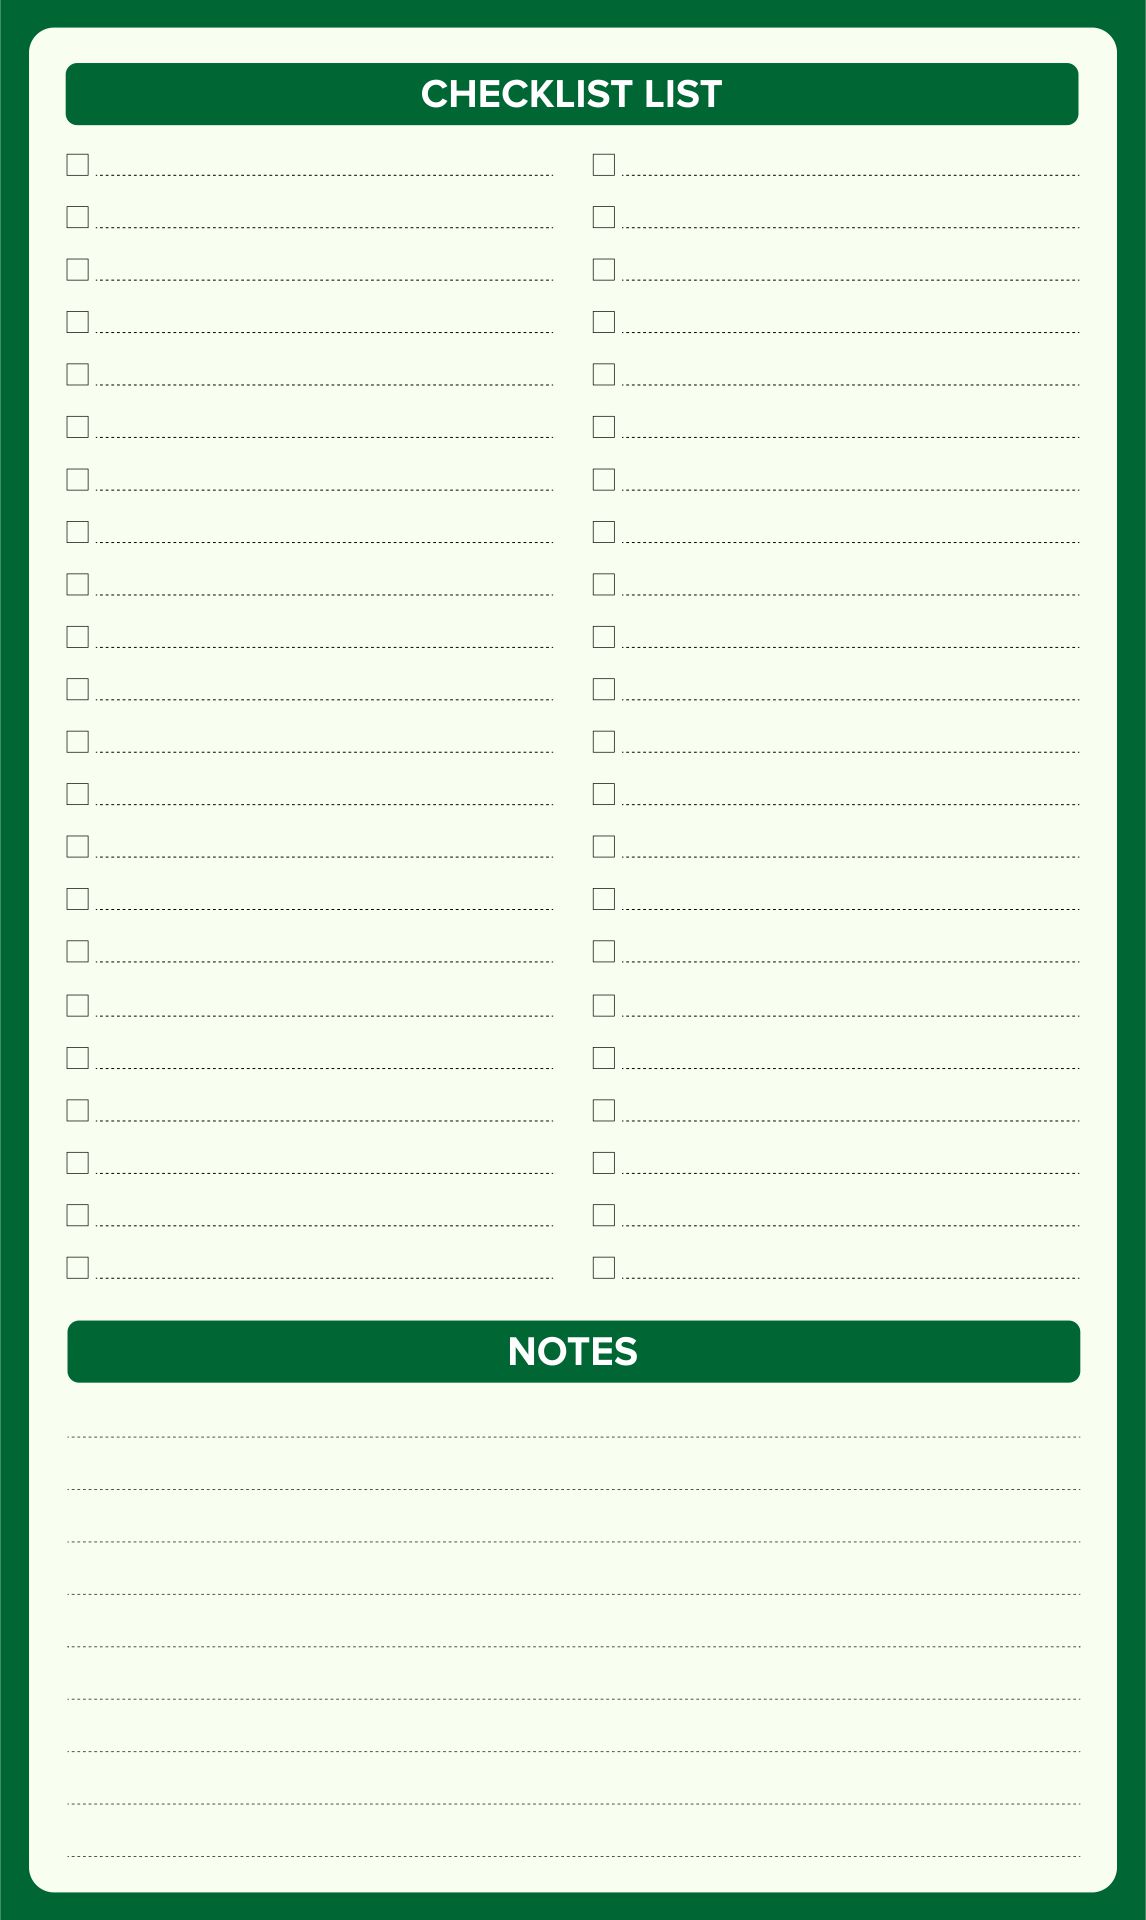 kink list checklist template blank